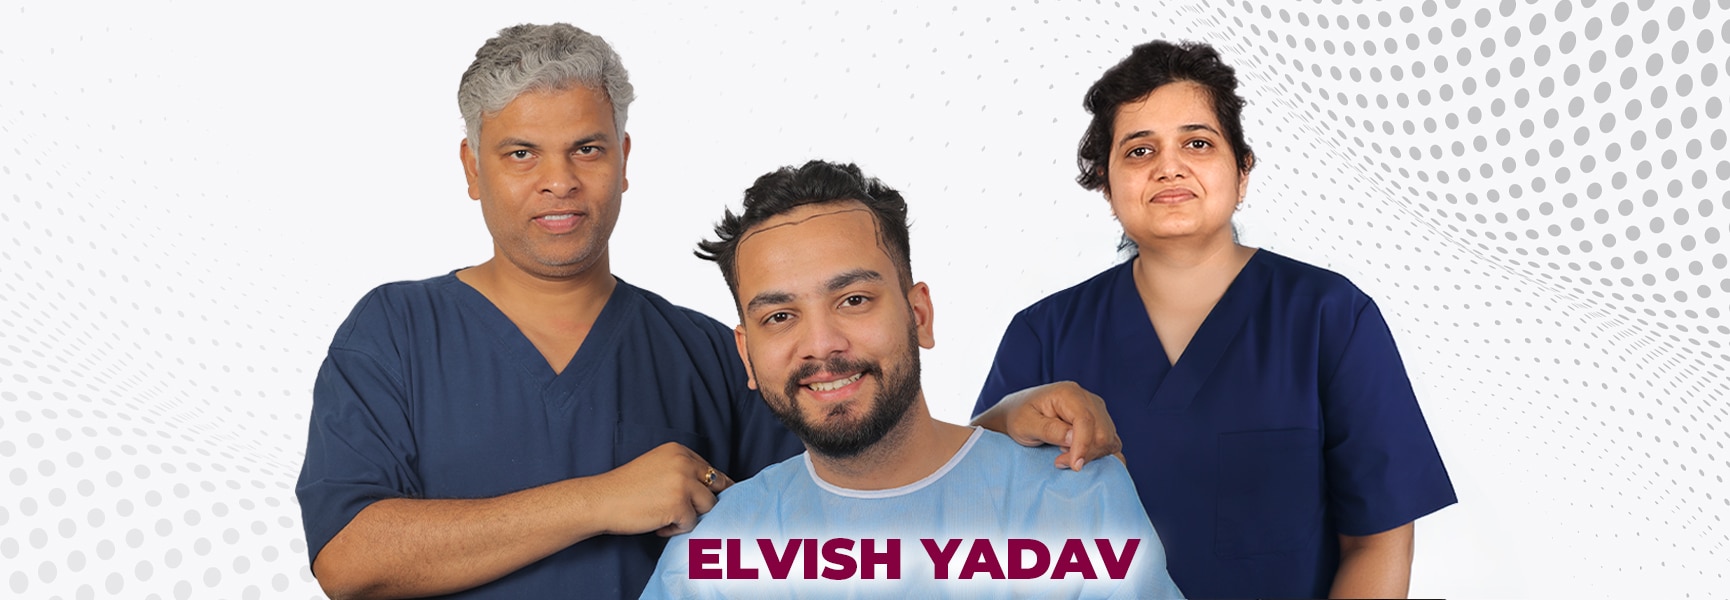 Celebrity Hair Transplant: Singer Elvish Yadav’s Hair Restoration Journey with Eugenix